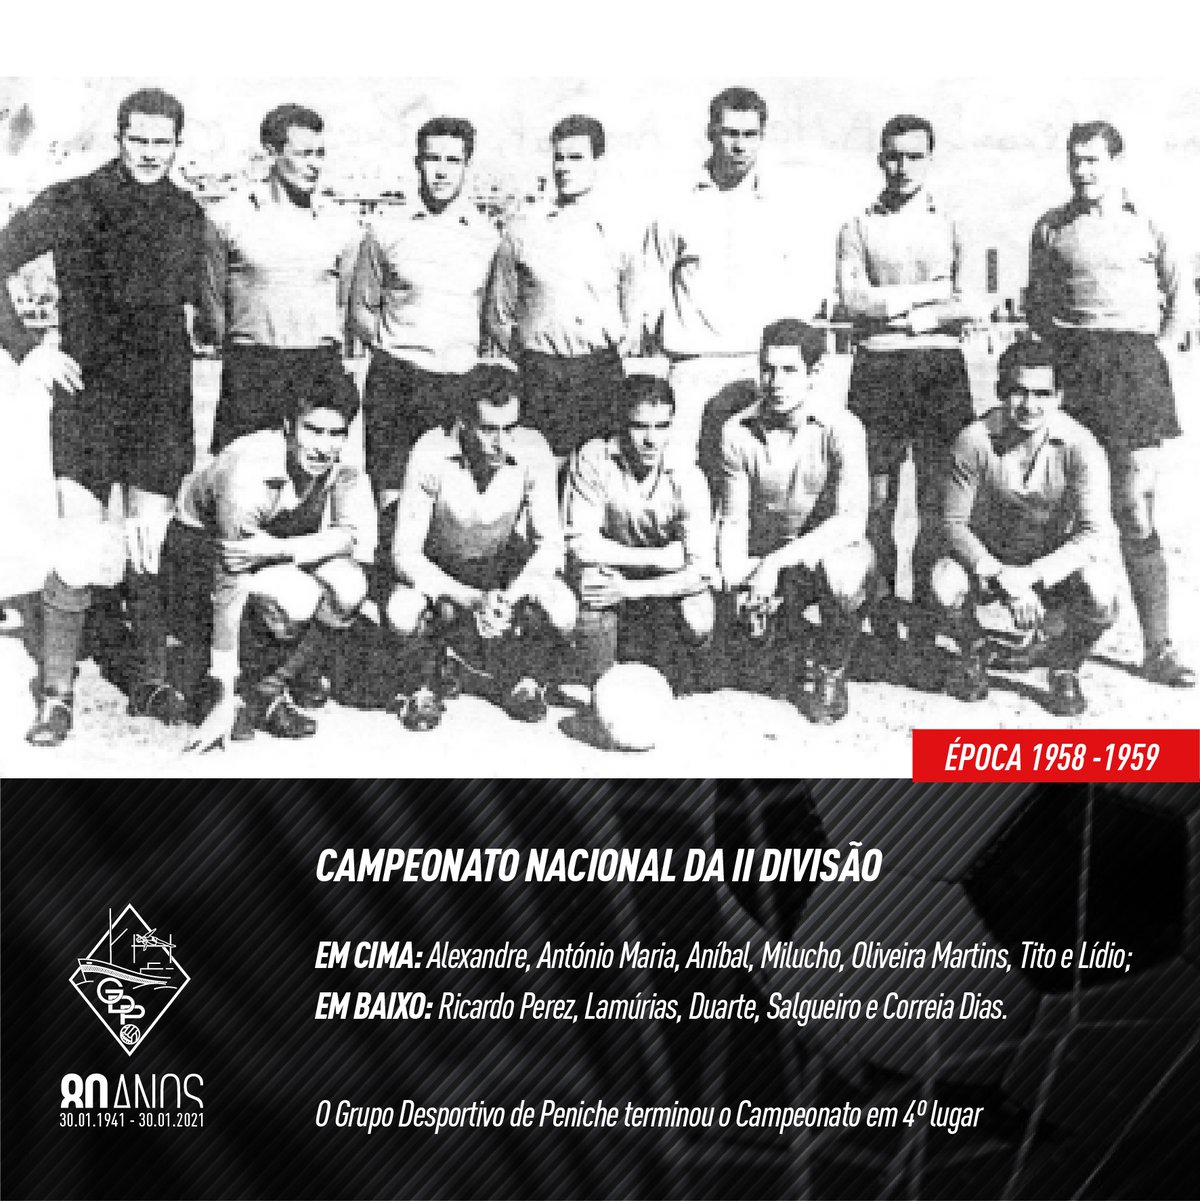 ÉPOCA 1958 -1959